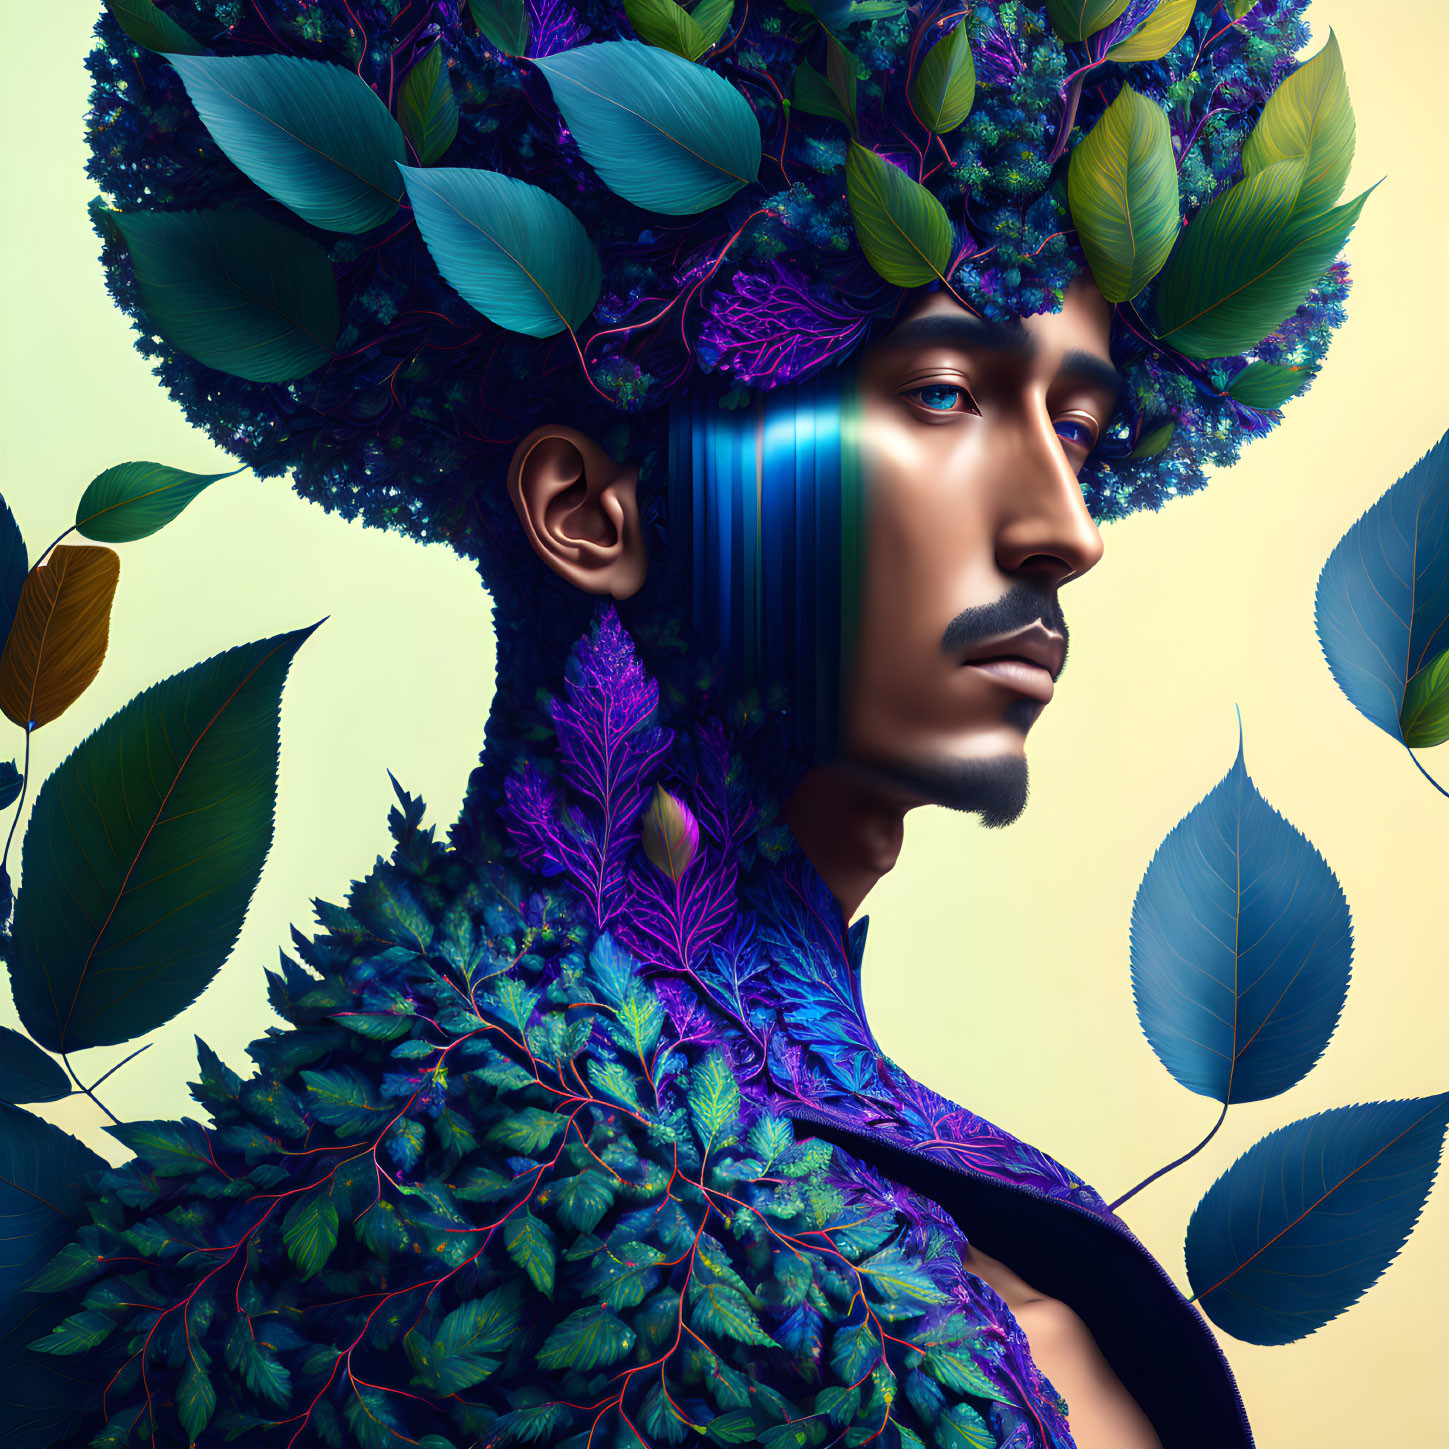 Man with Vibrant Leaf Headdress and Cloak in Digital Art